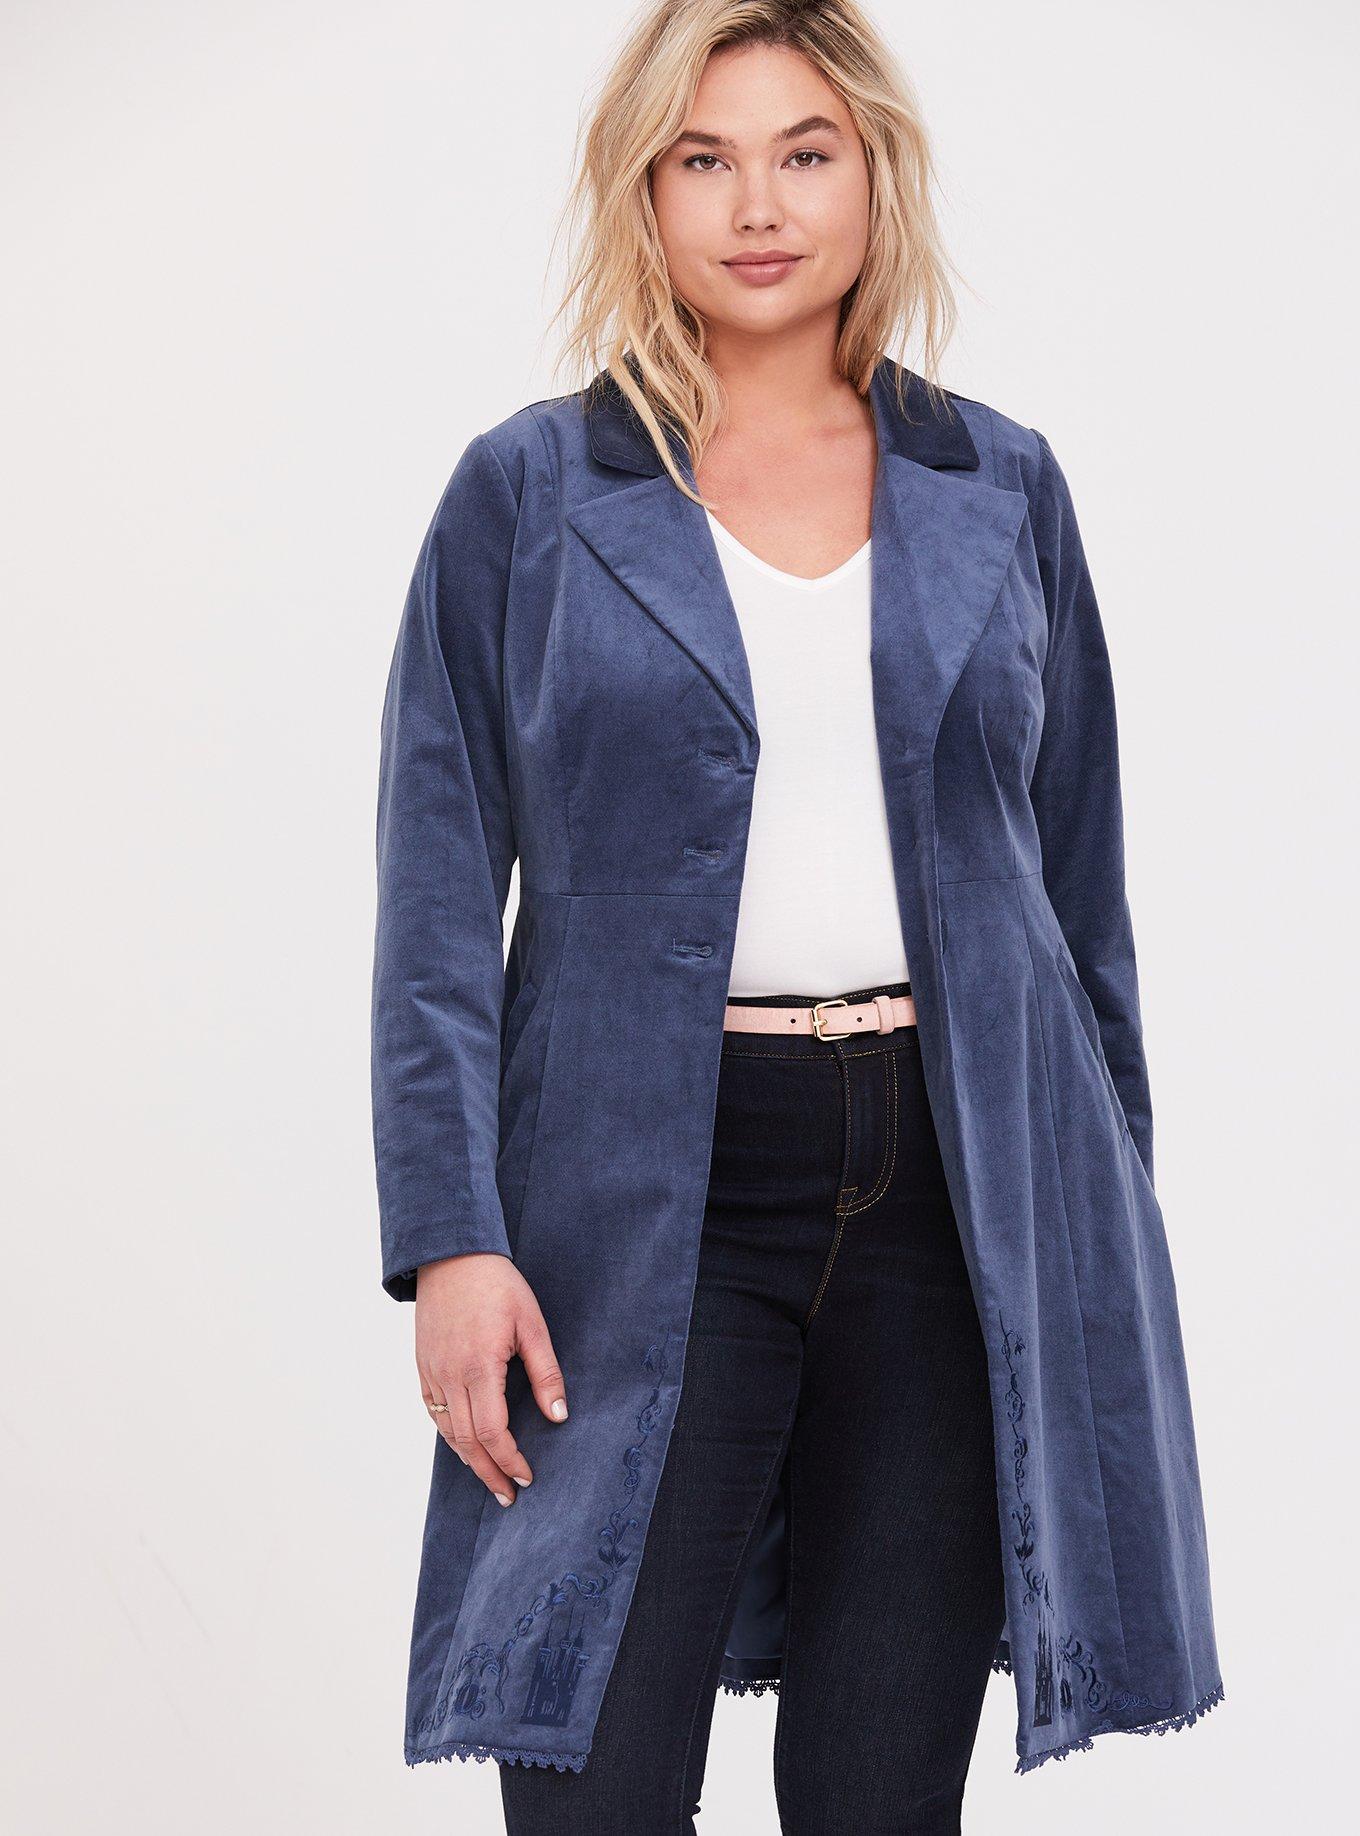 Torrid Women's Coat - Coats & jackets